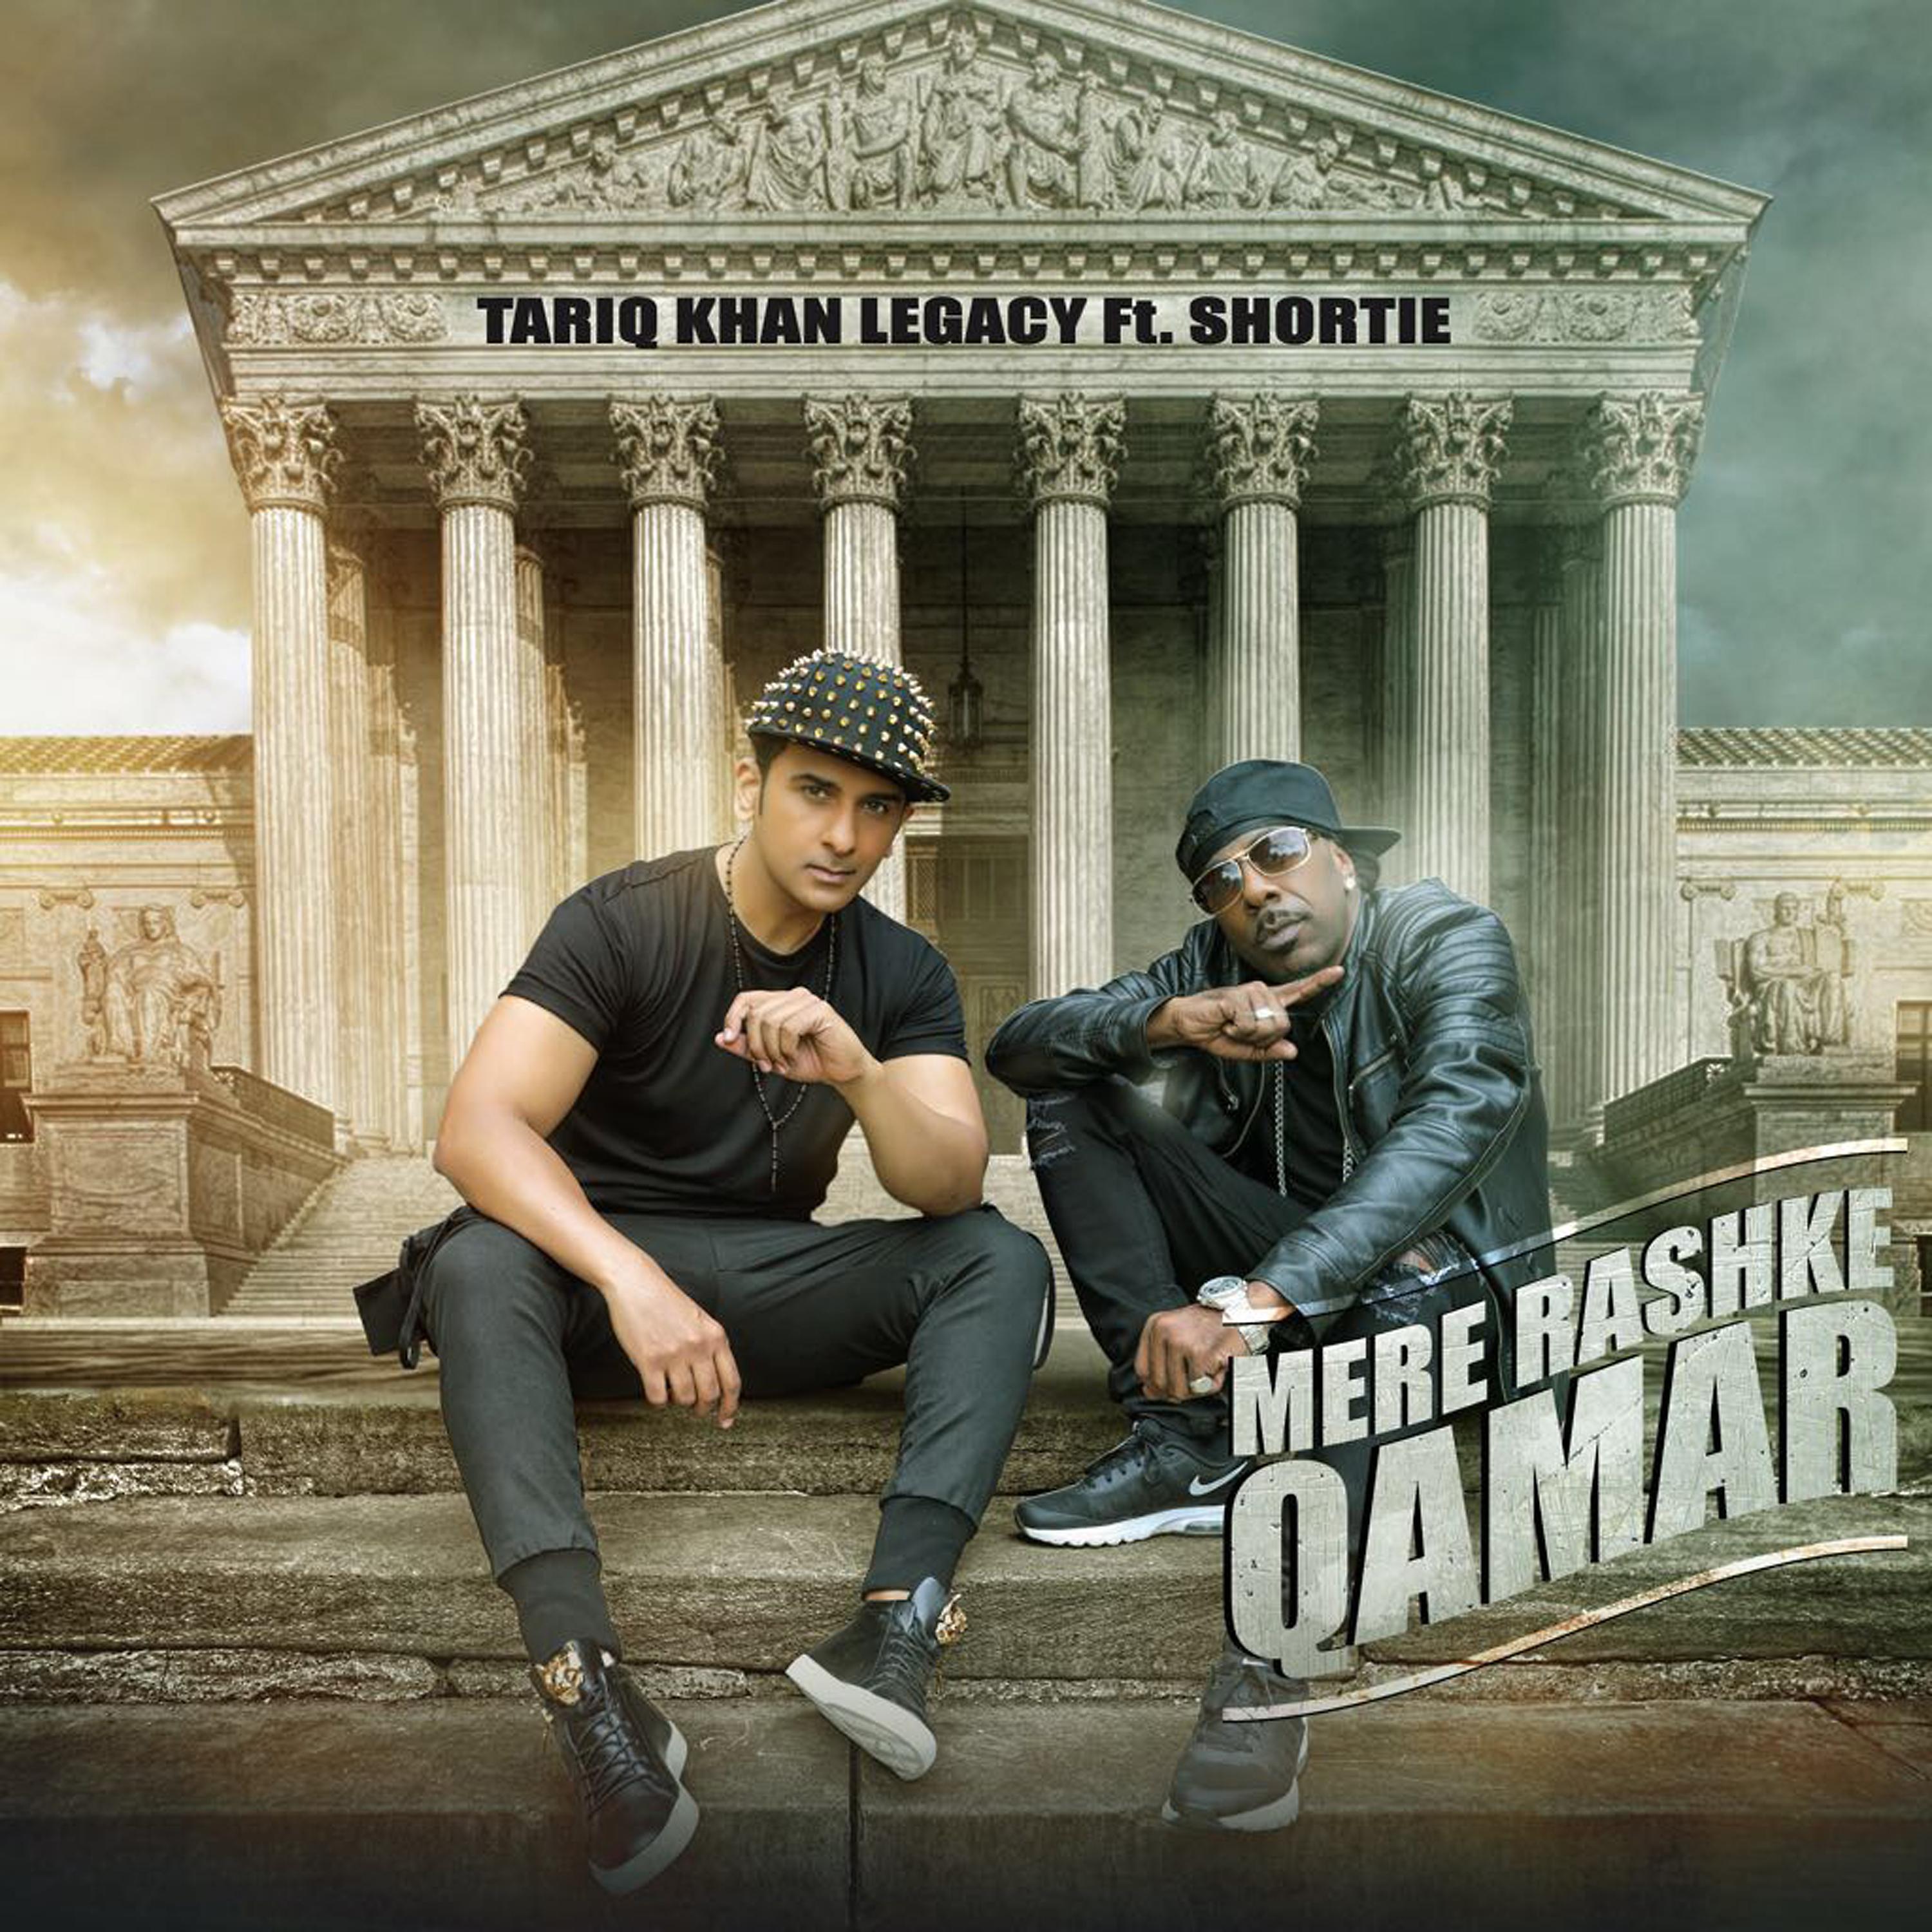 Постер альбома Mere Rashke Qamar